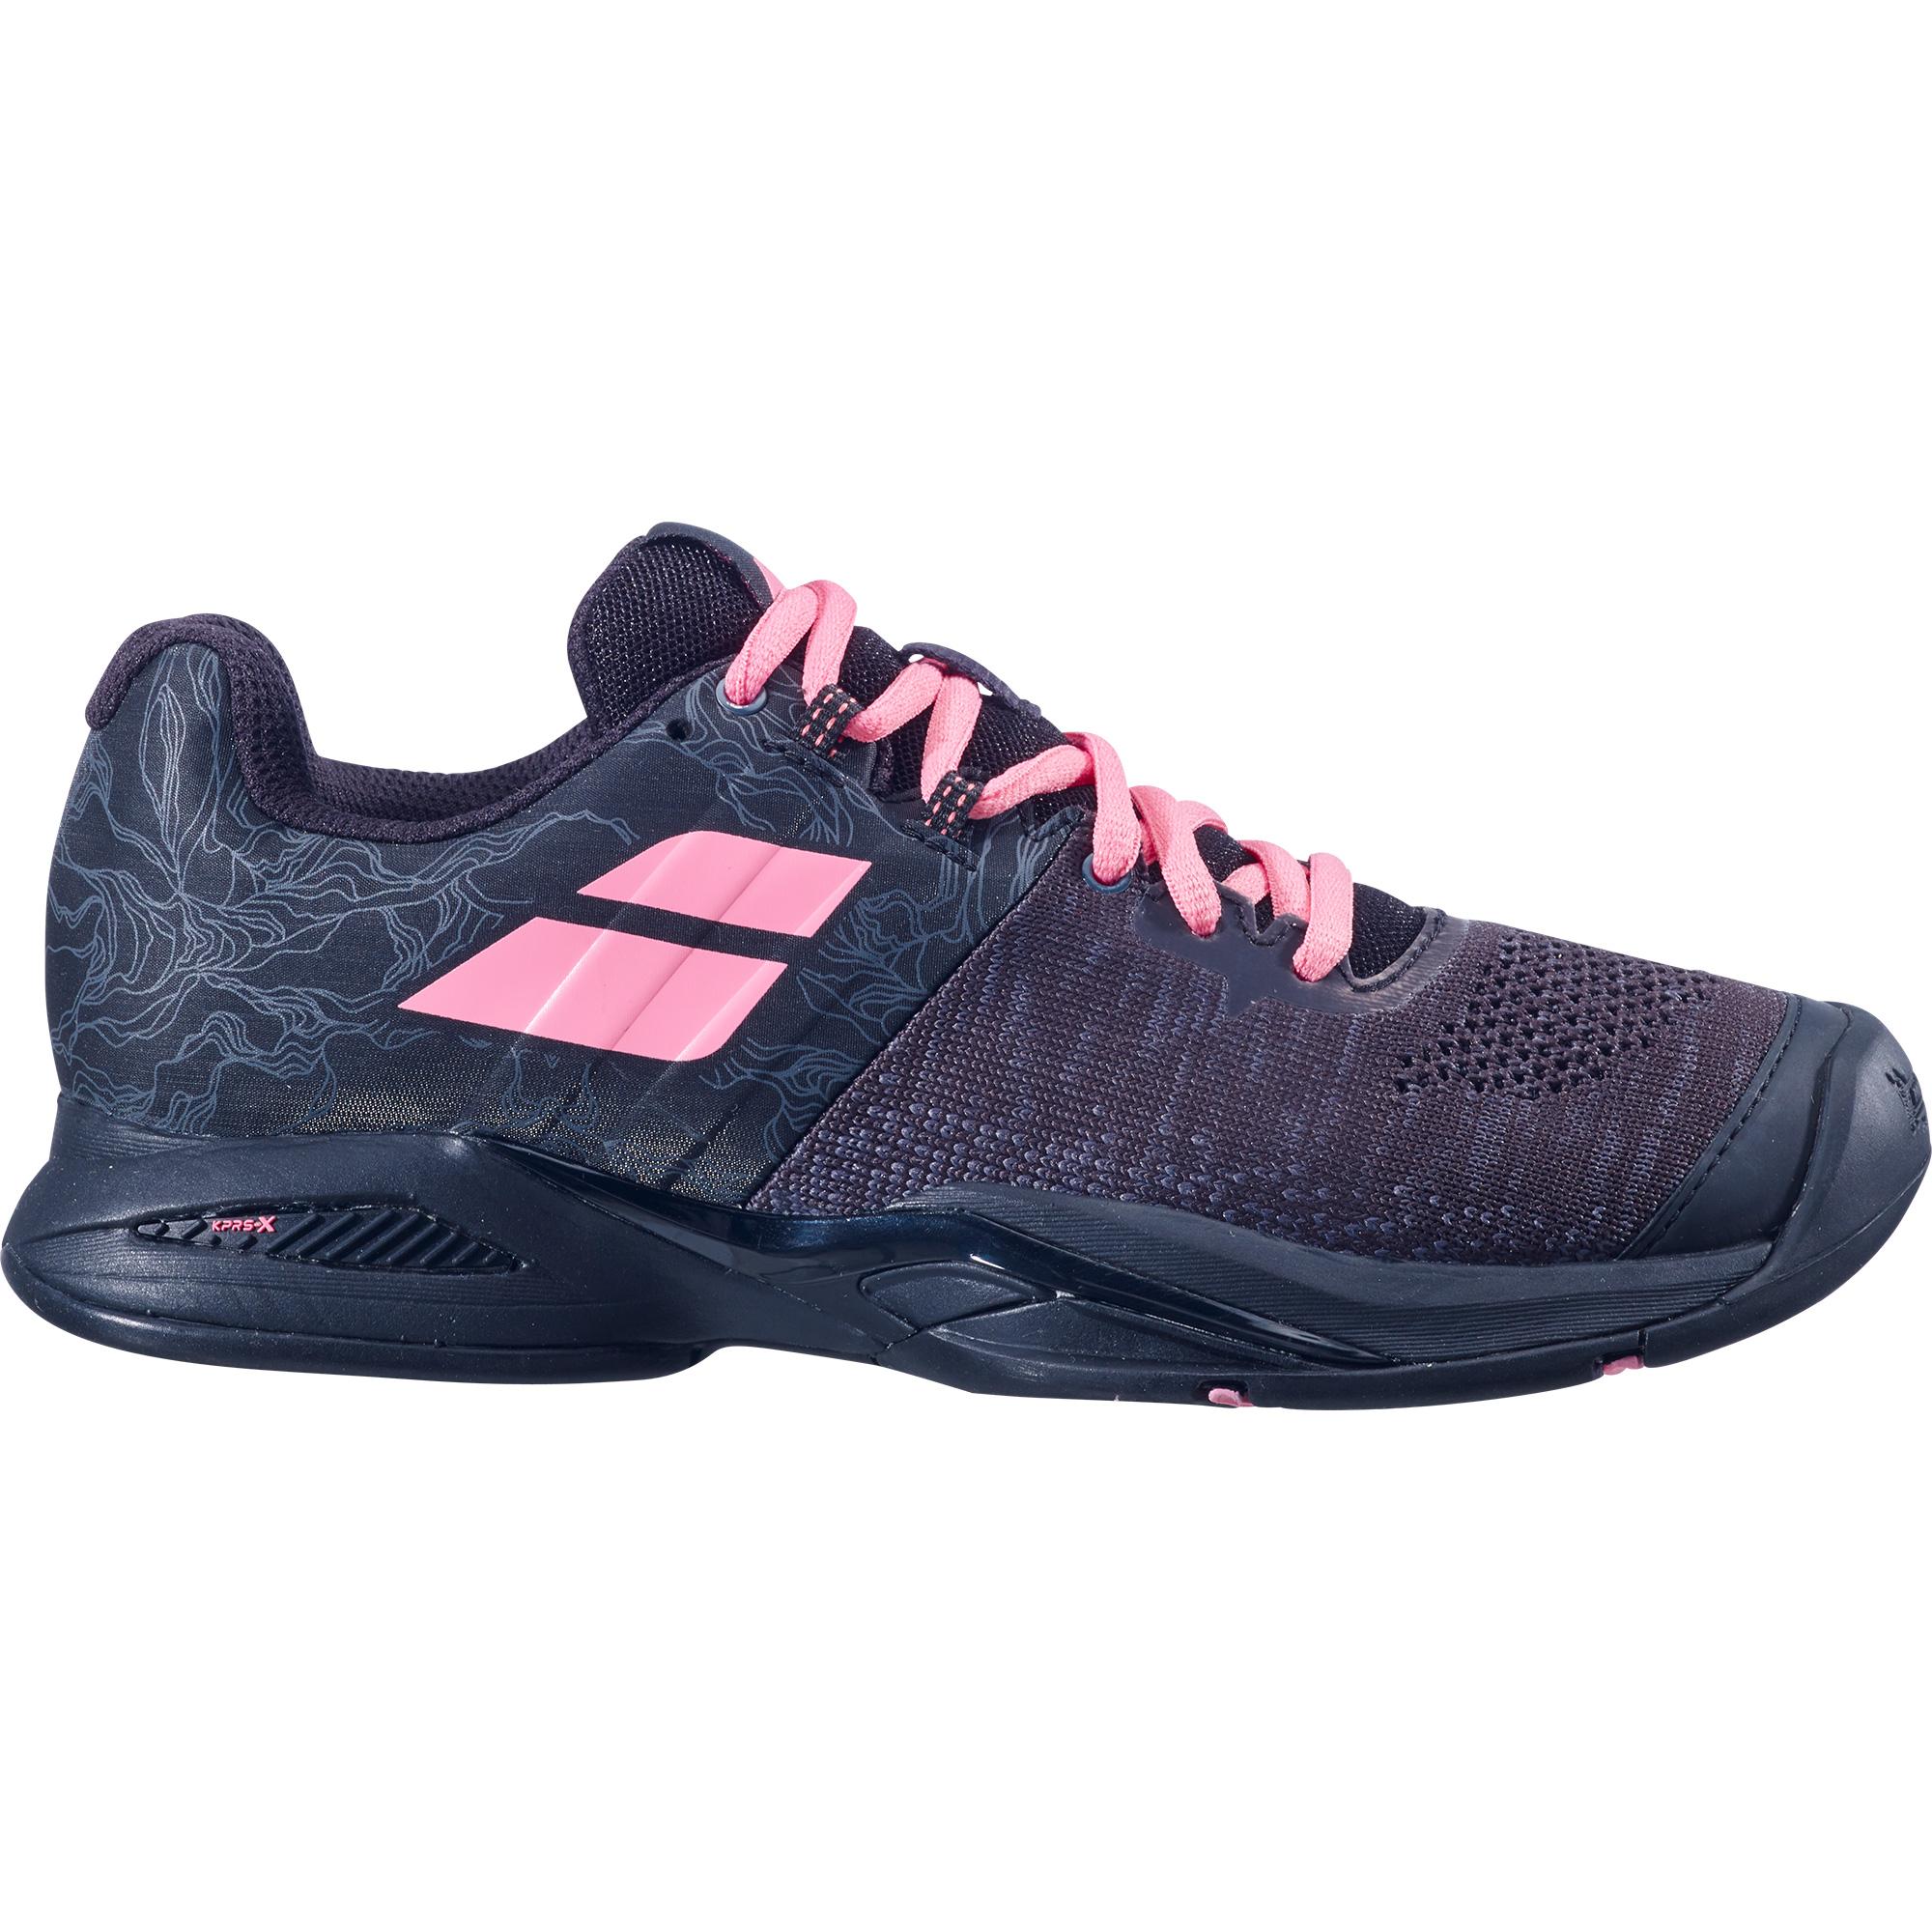 Babolat Womens Propulse Blast Tennis Shoes - Black/Pink - Tennisnuts.com